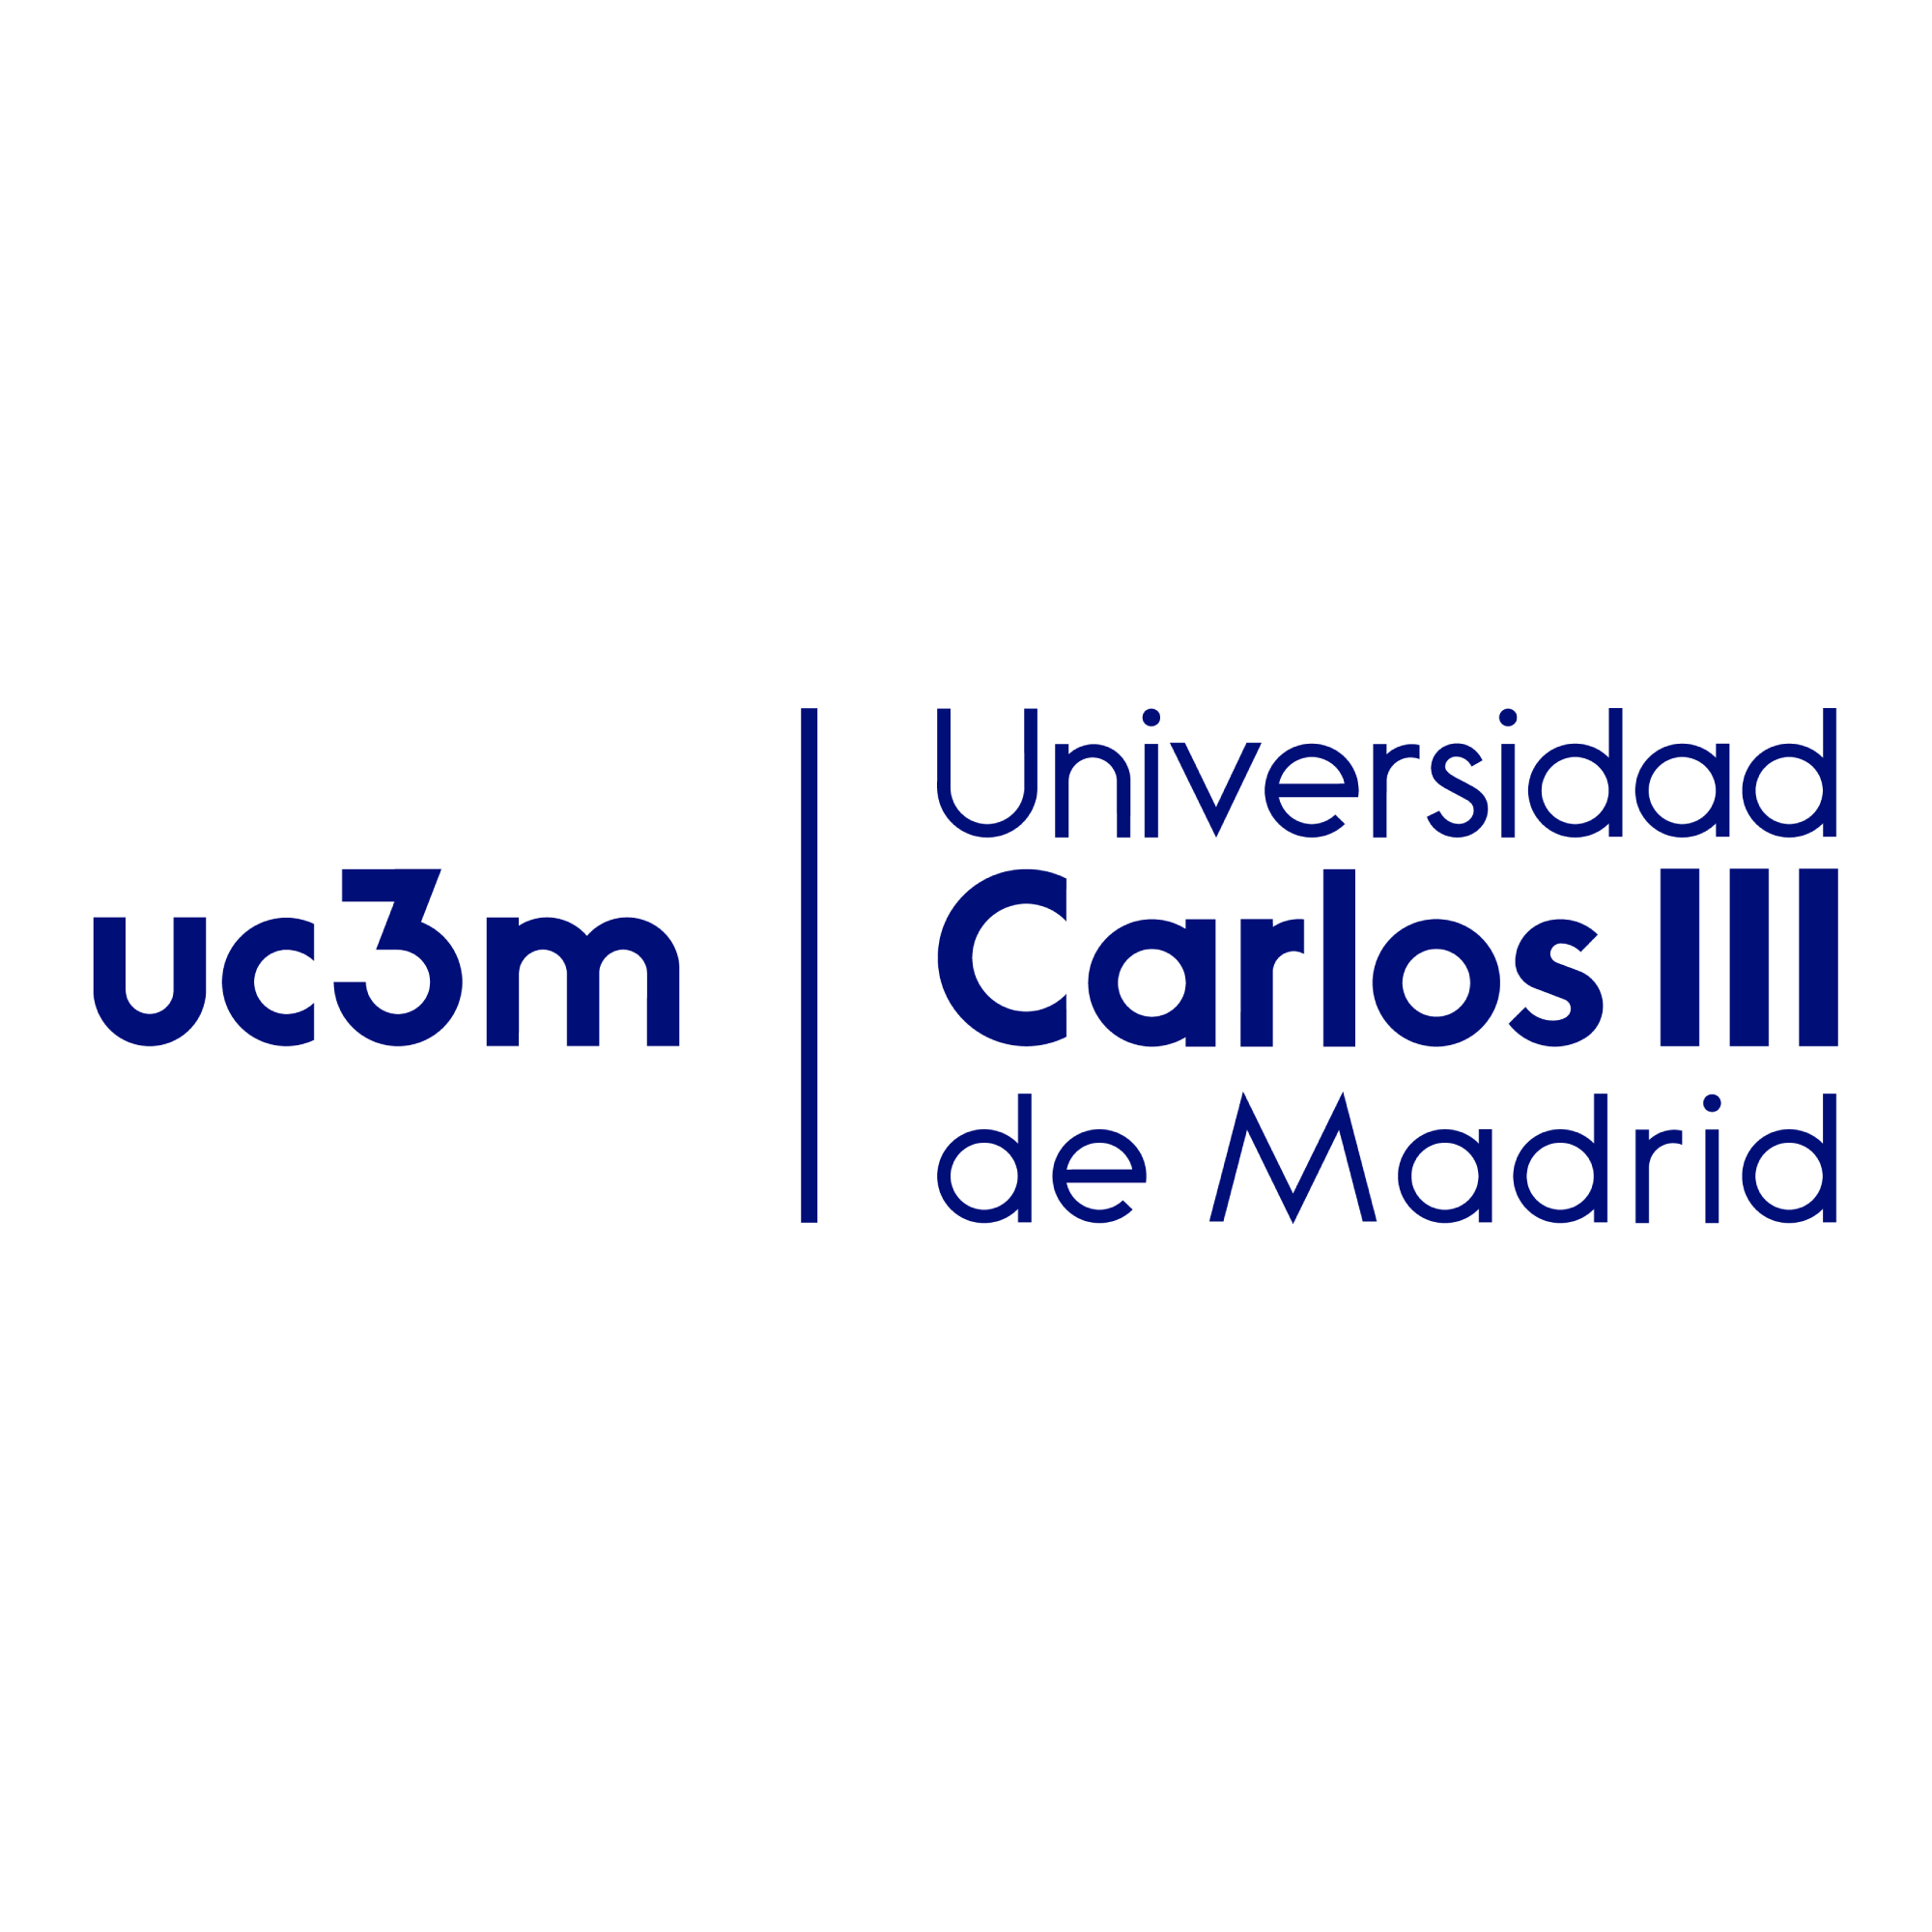 uc3m_logo.jpg 